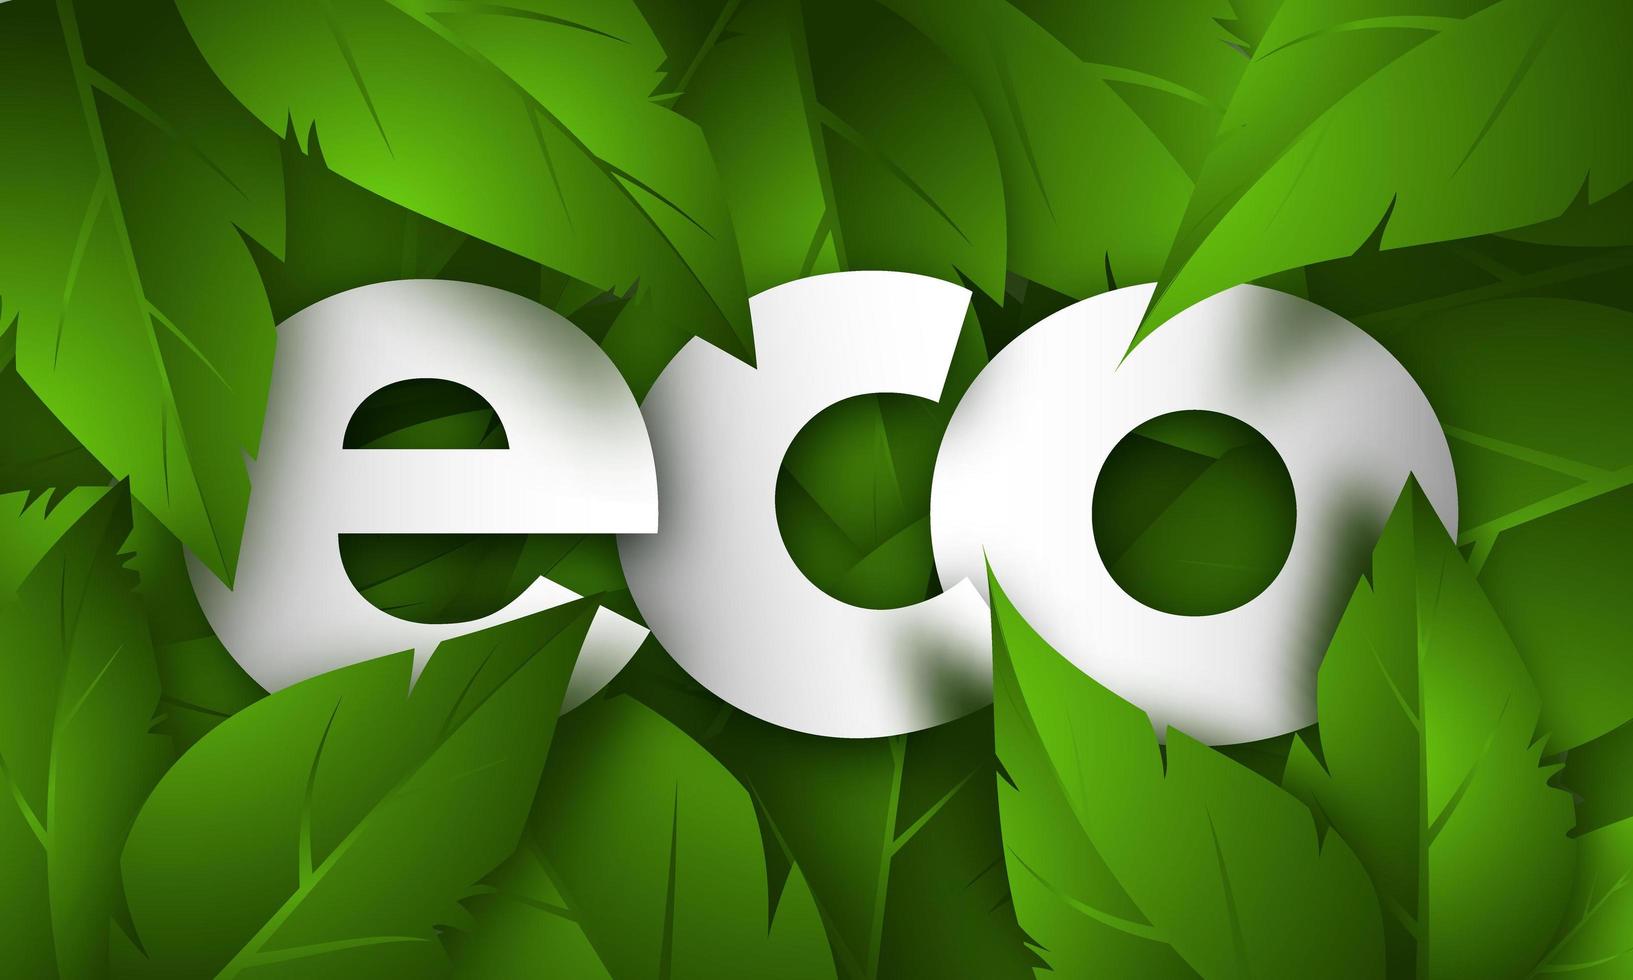 banner de concepto ecológico con follaje verde exuberante. ilustración vectorial vector